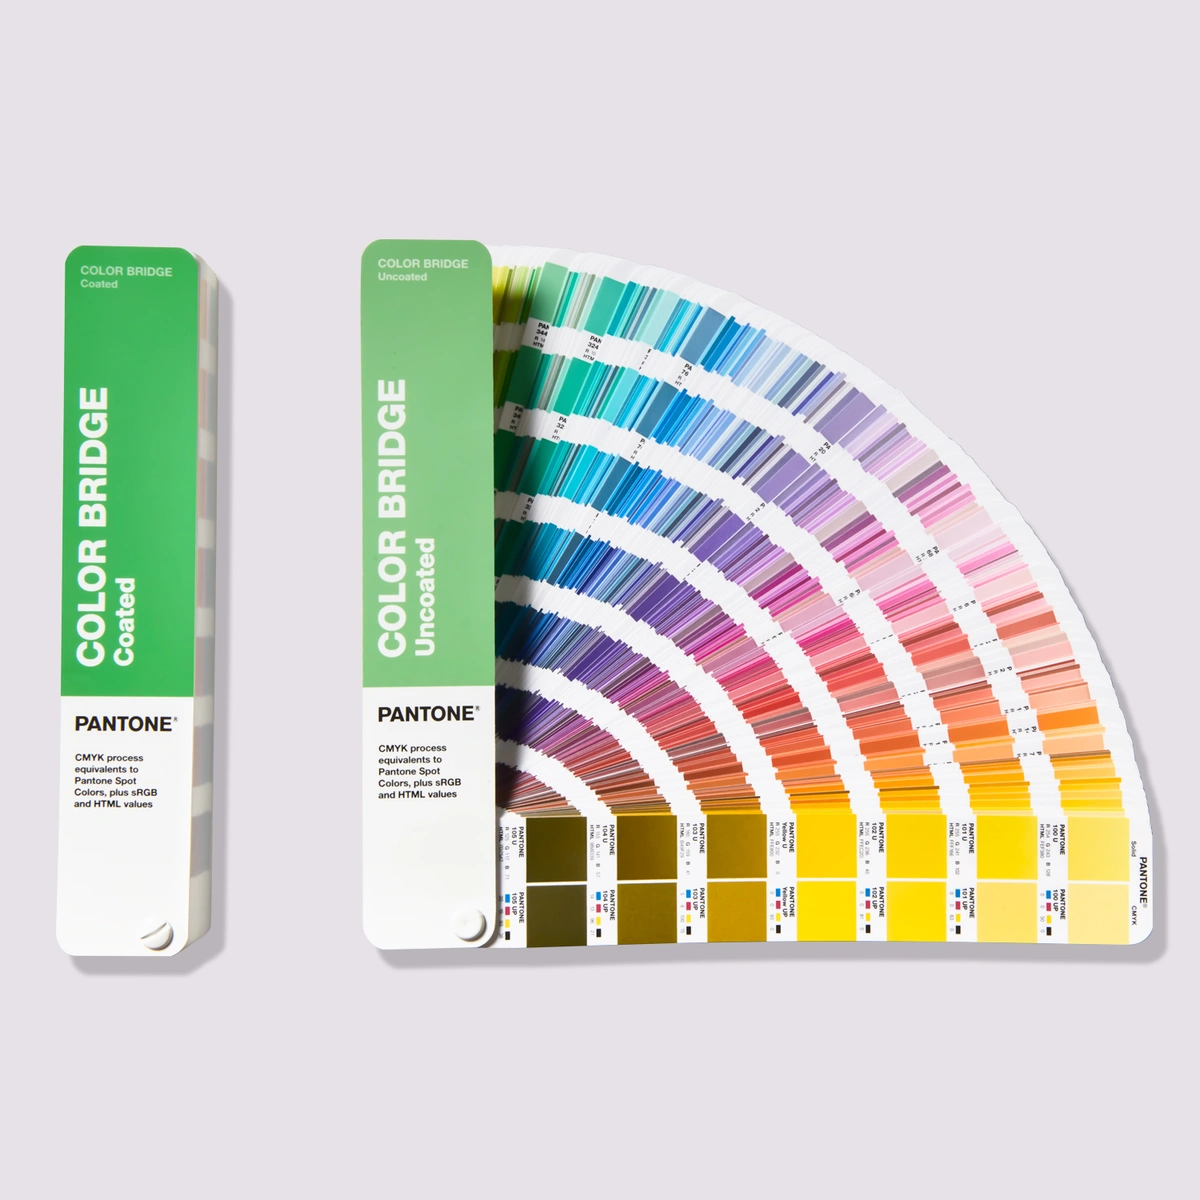 Controlul culorii / Pantone - PANTONE Color Bridge Guide Set Coated & Uncoated, transilvae.ro